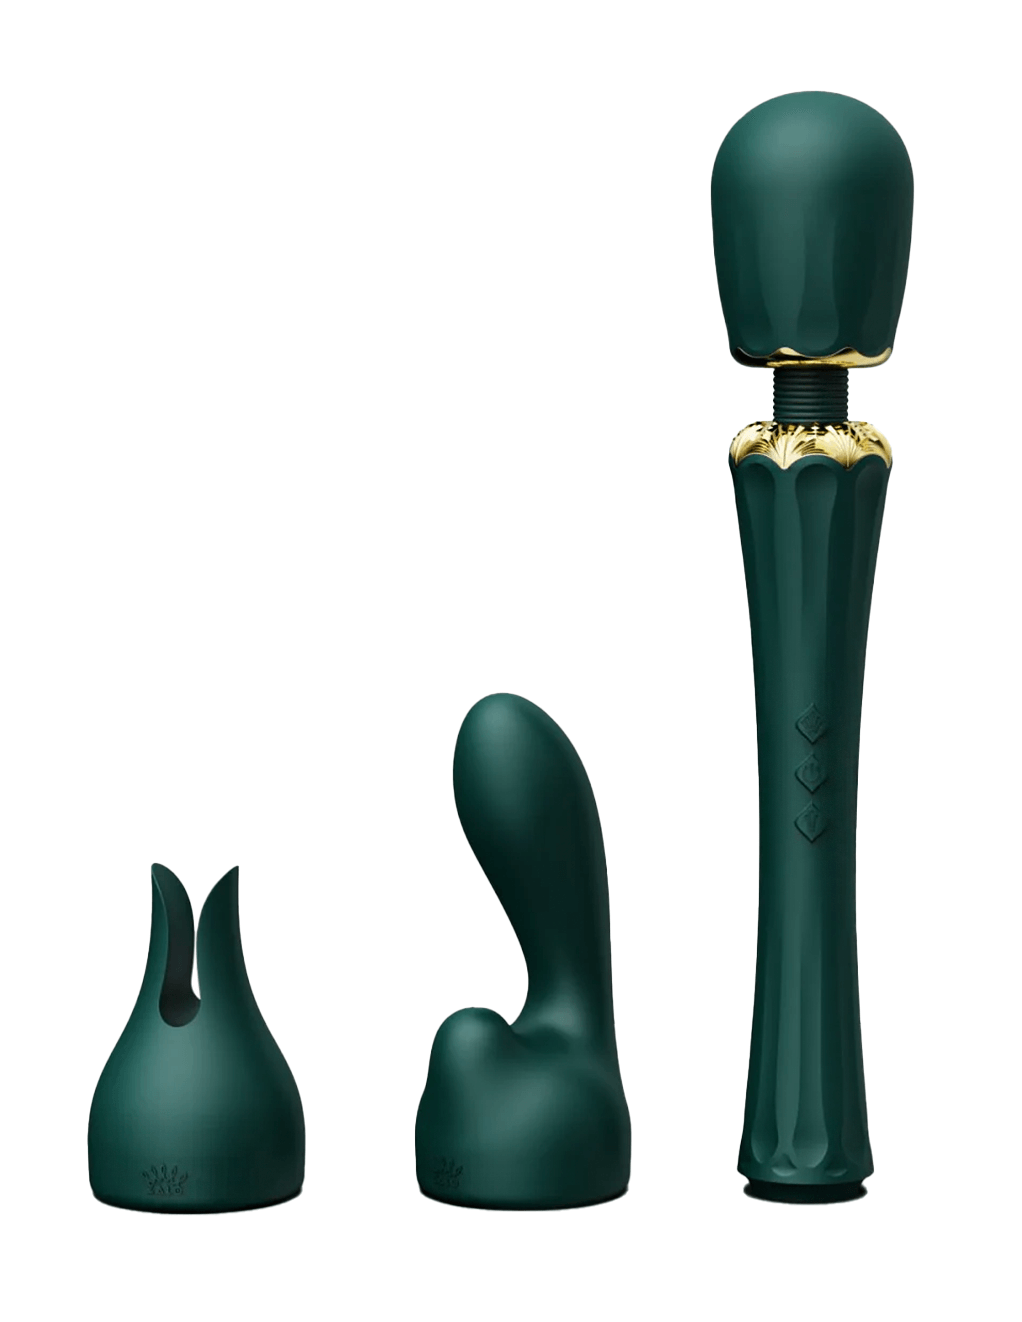 Zalo Kyro - Turquoise Green - Main